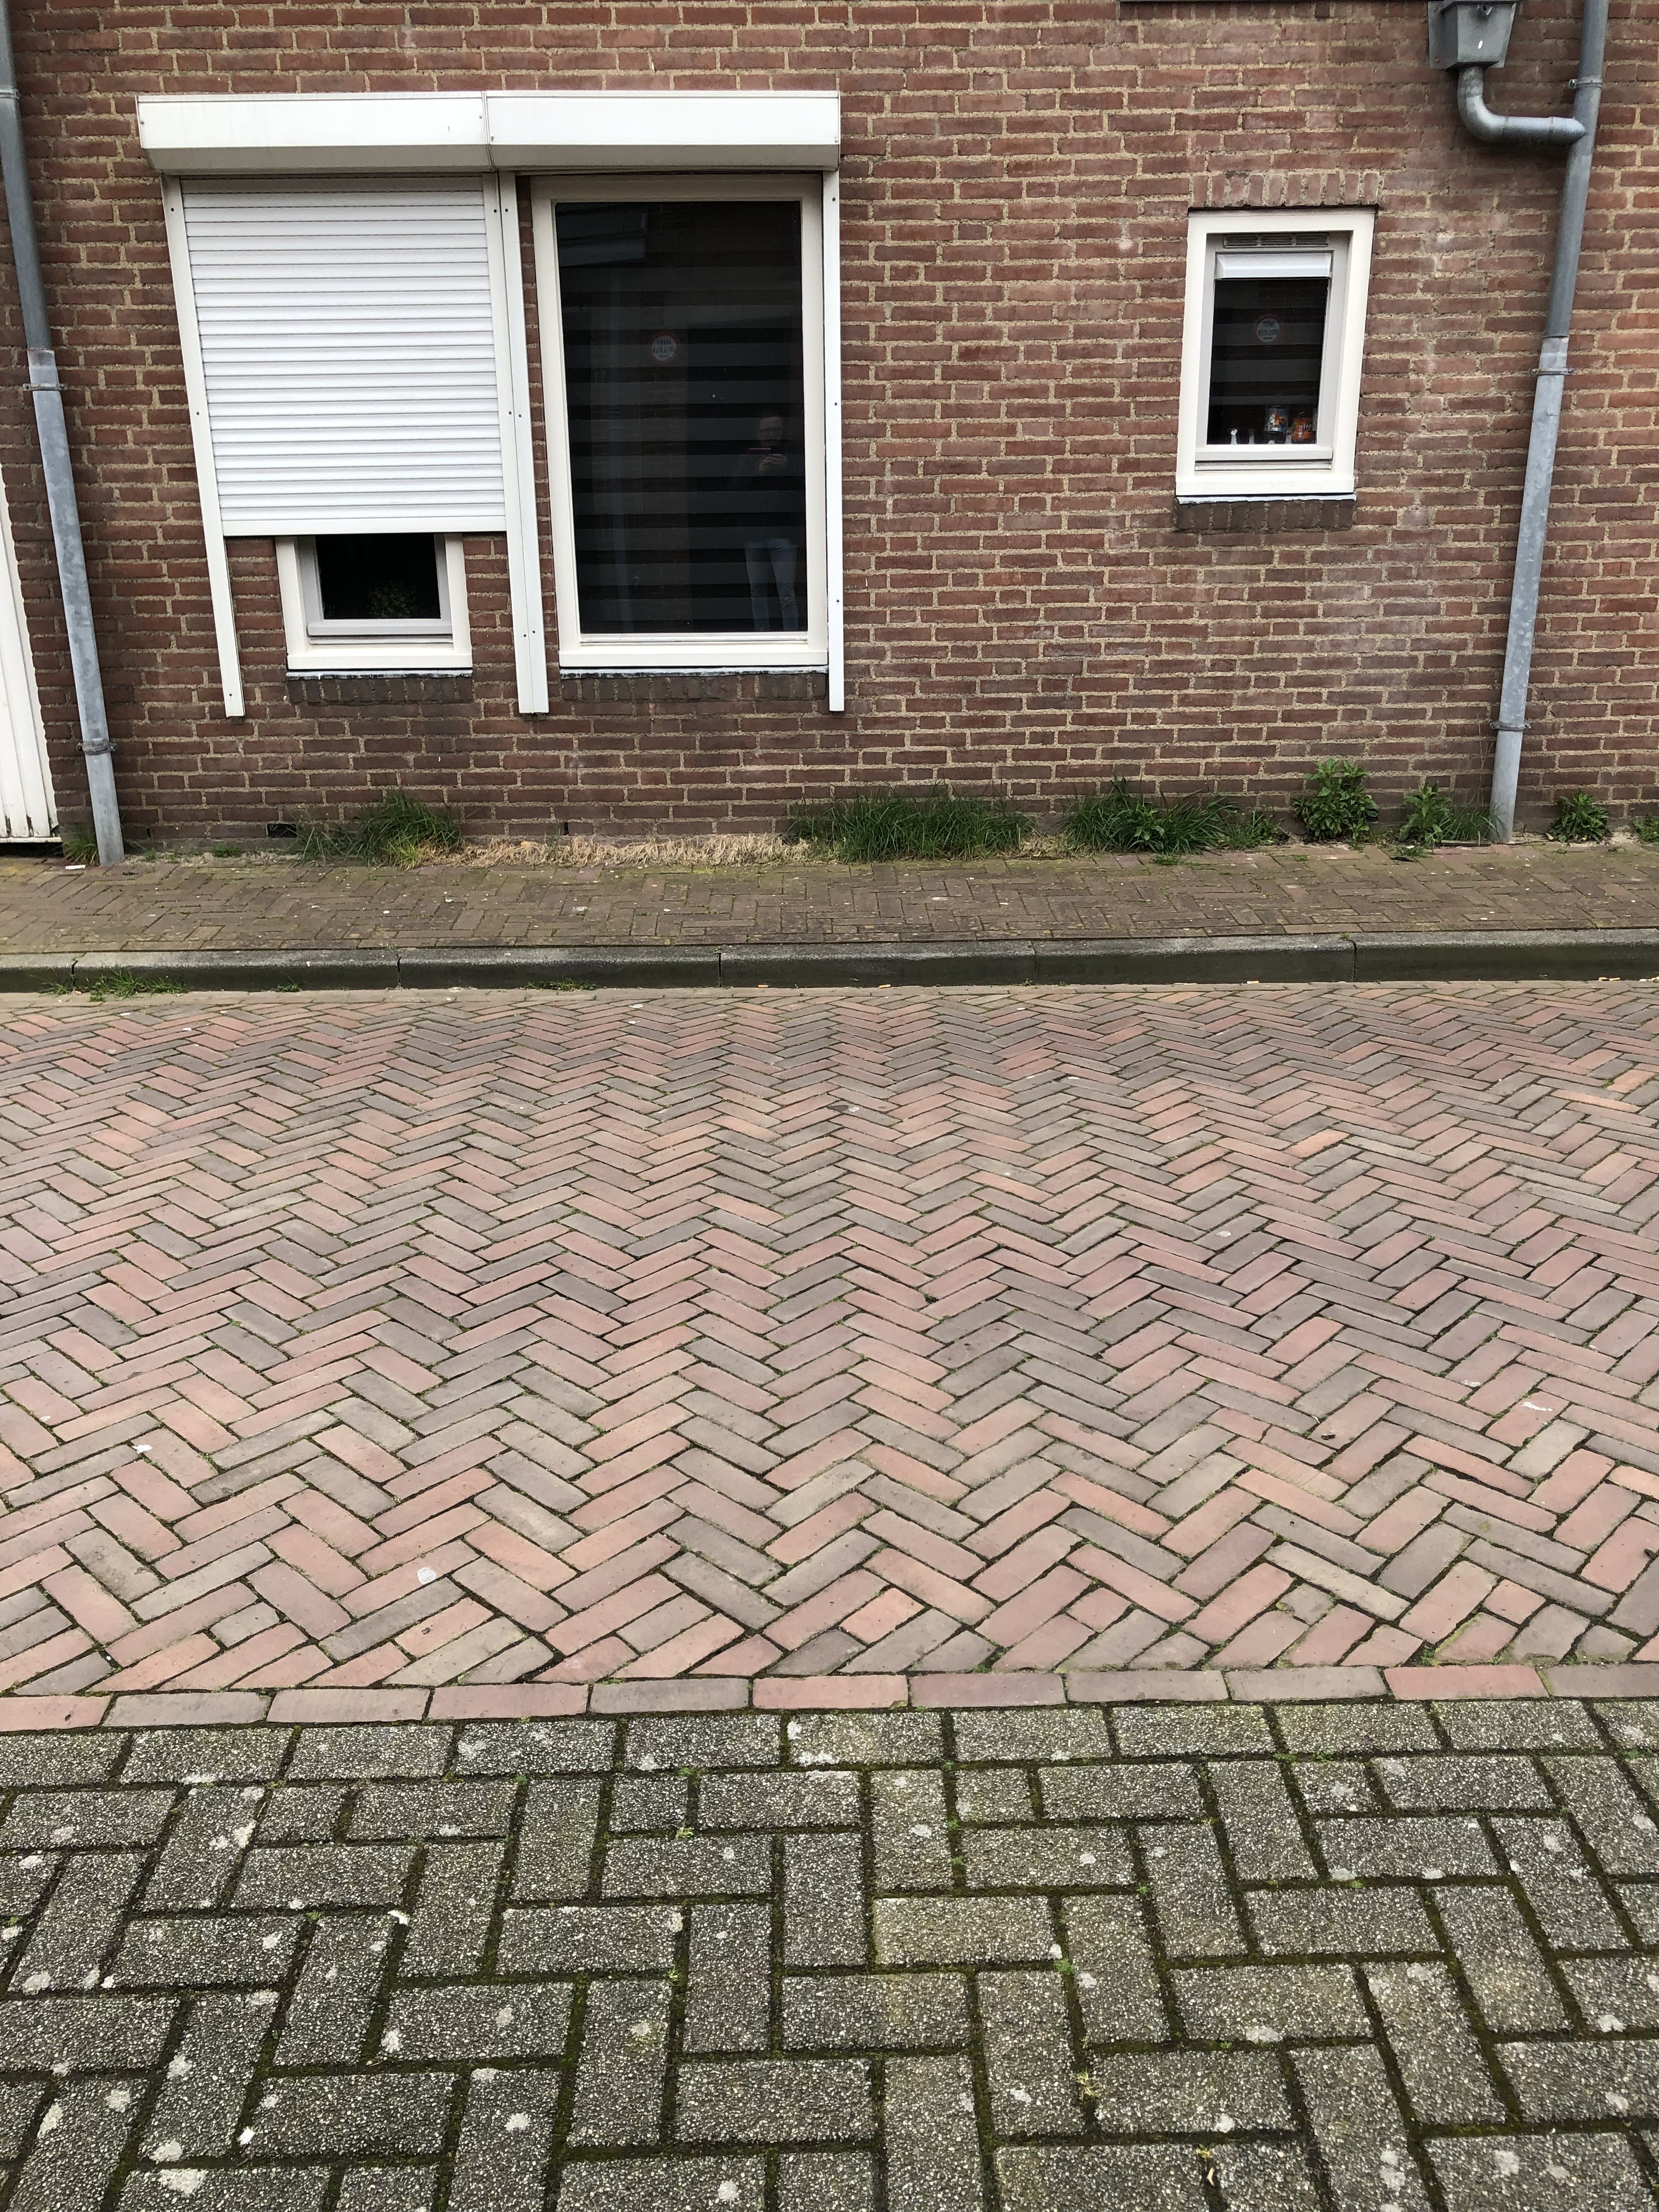 Dwarsstraat 1, 5051 RA Goirle, Nederland